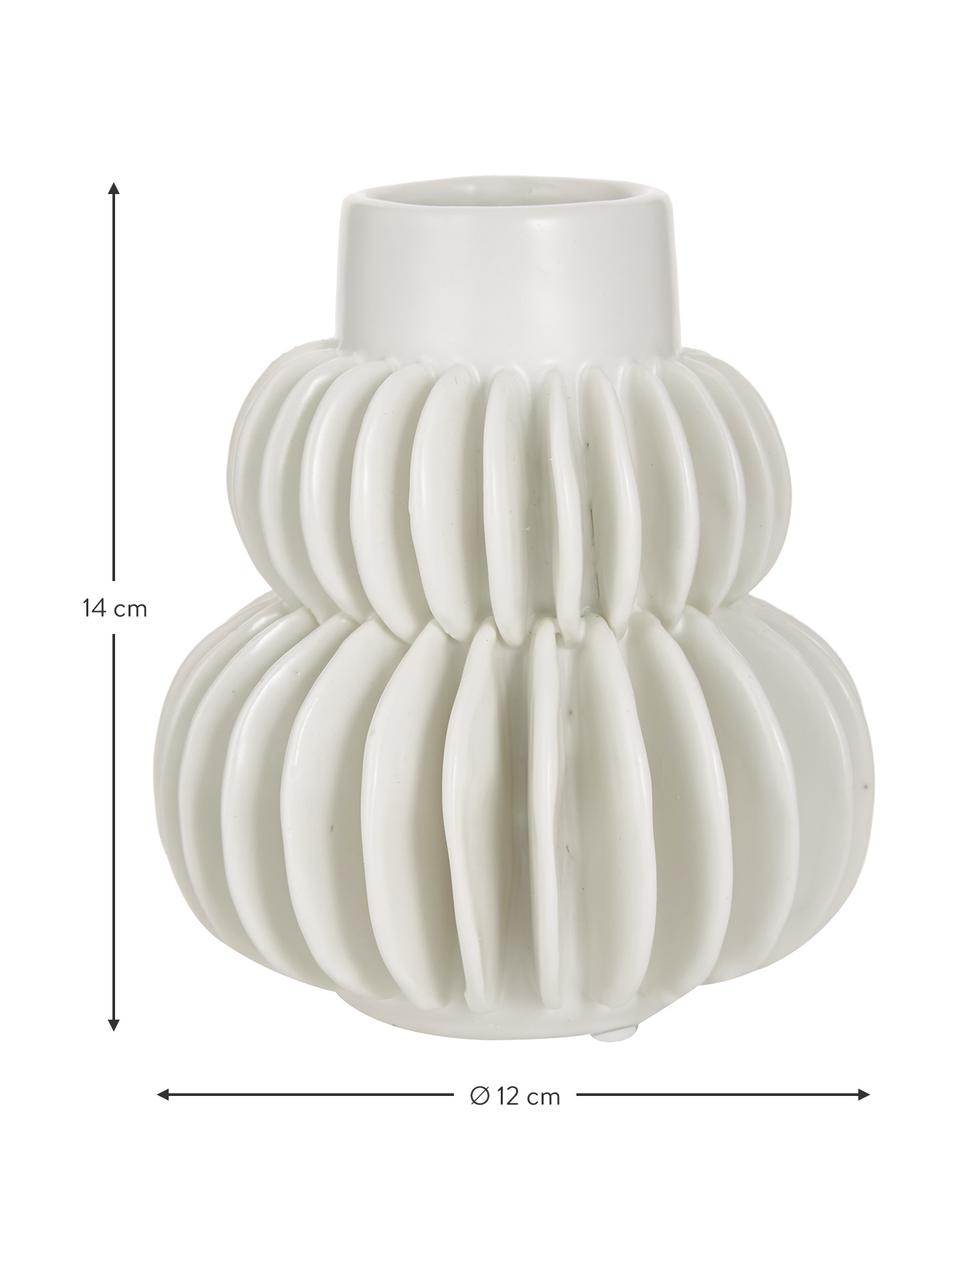 Malá váza z kameniny Bela, Kamenina, Bílá, Š 12 cm, V 14 cm